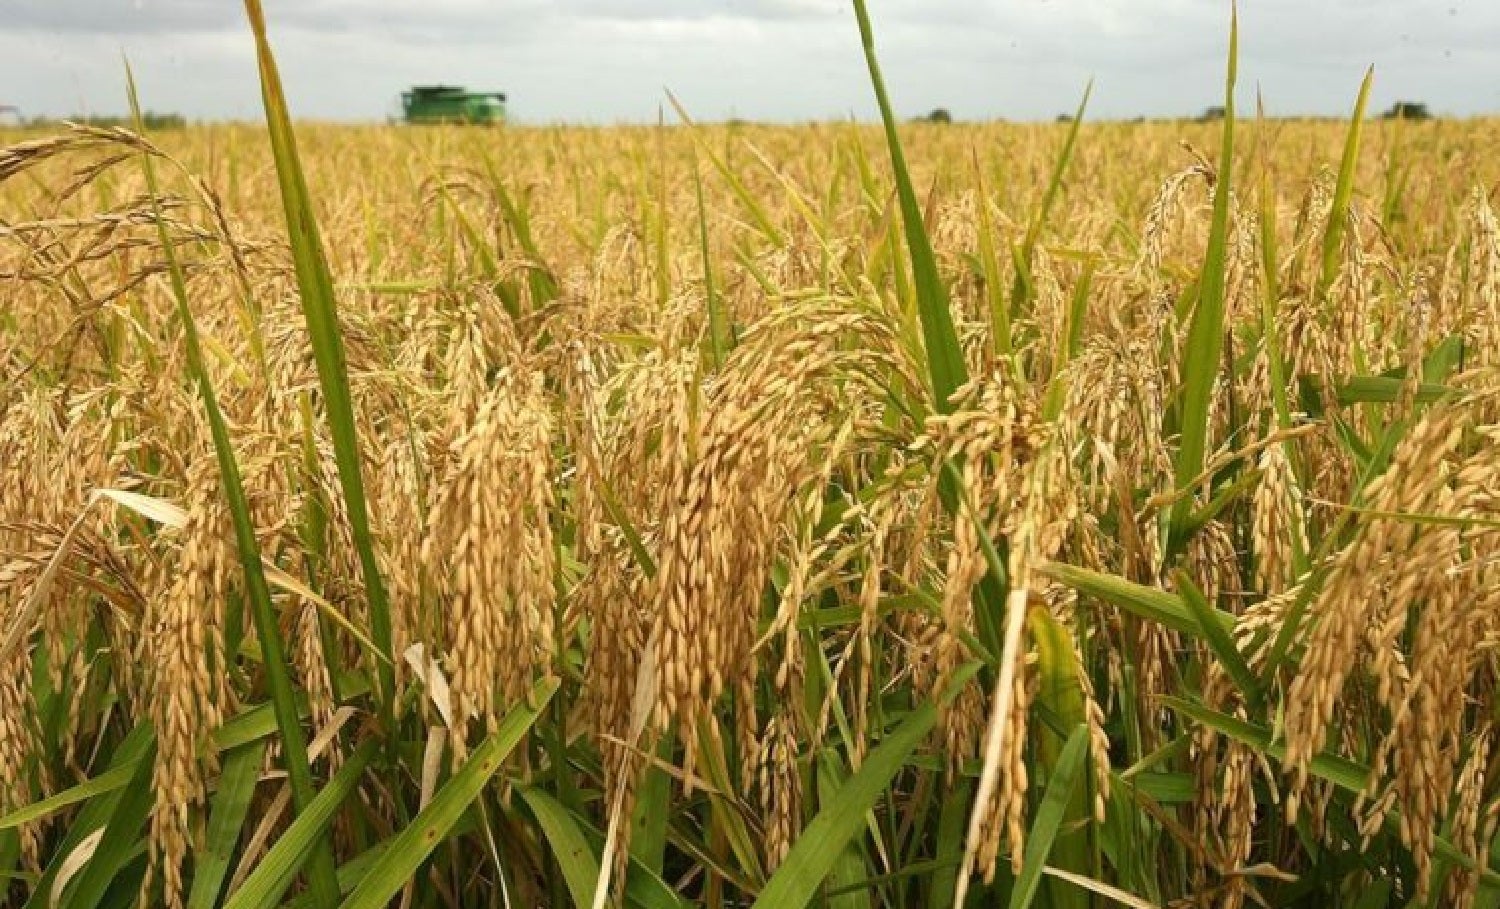 Rice farmers, millers in Adamawa commend Border closure